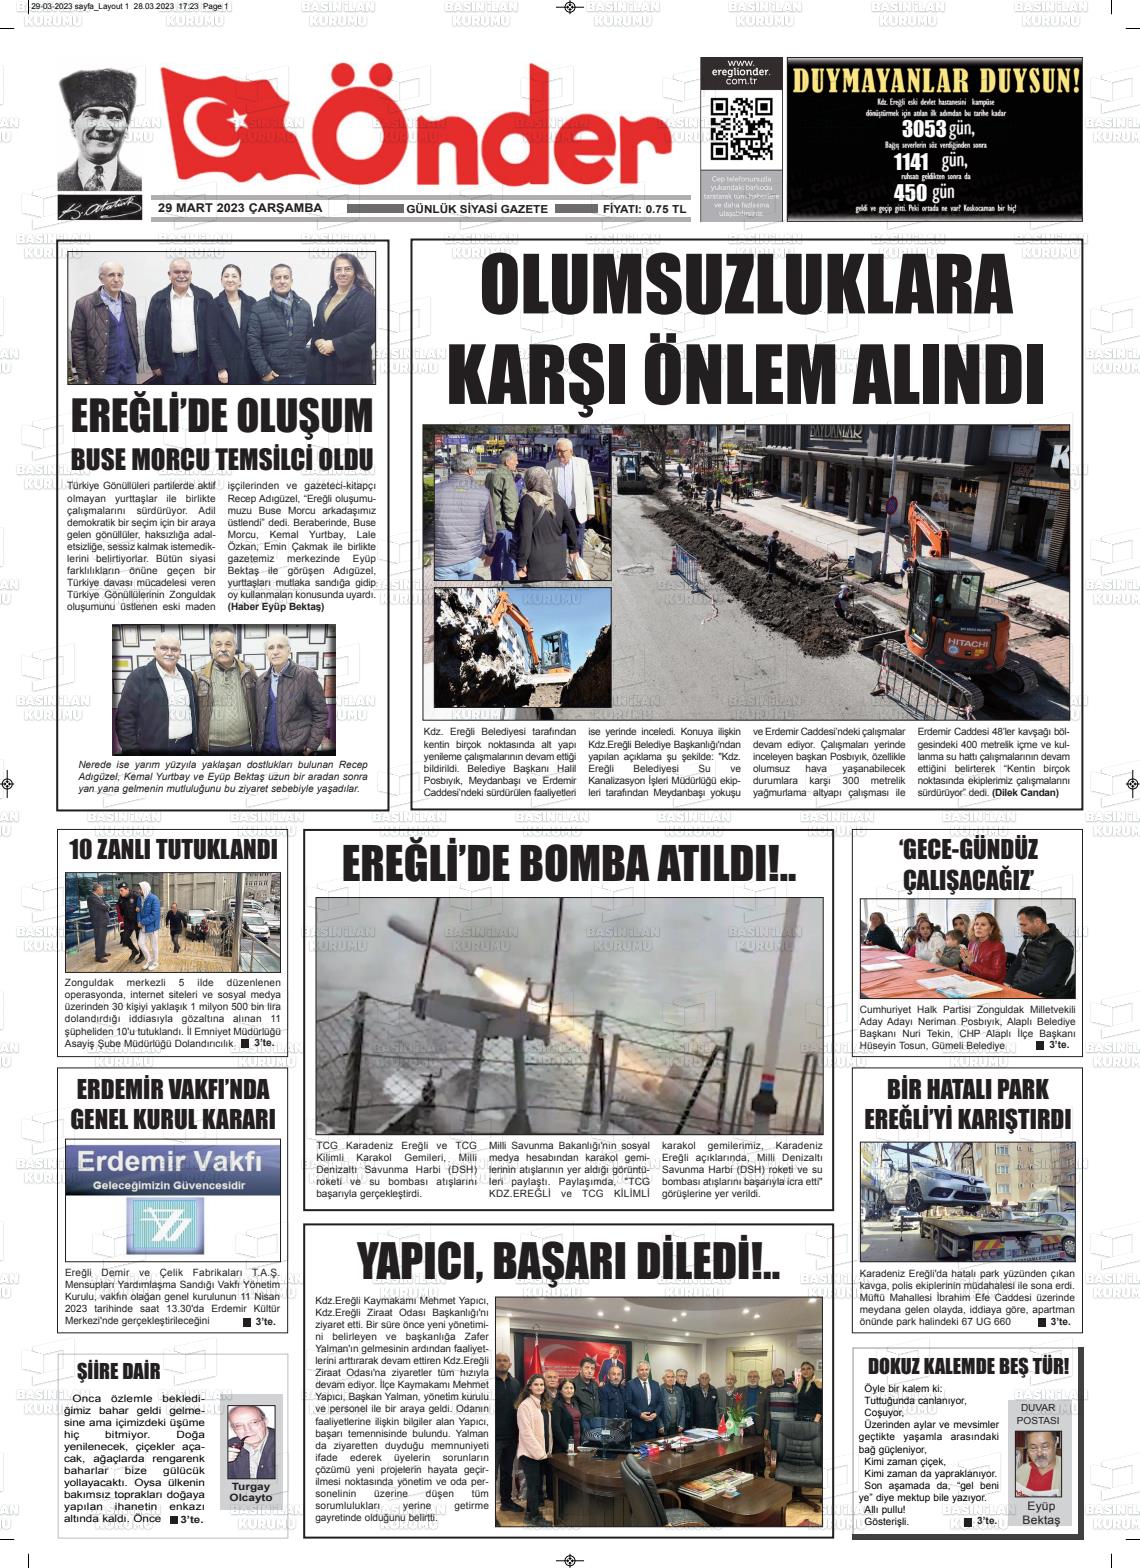 29 Mart 2023 Zonguldak Önder Gazete Manşeti